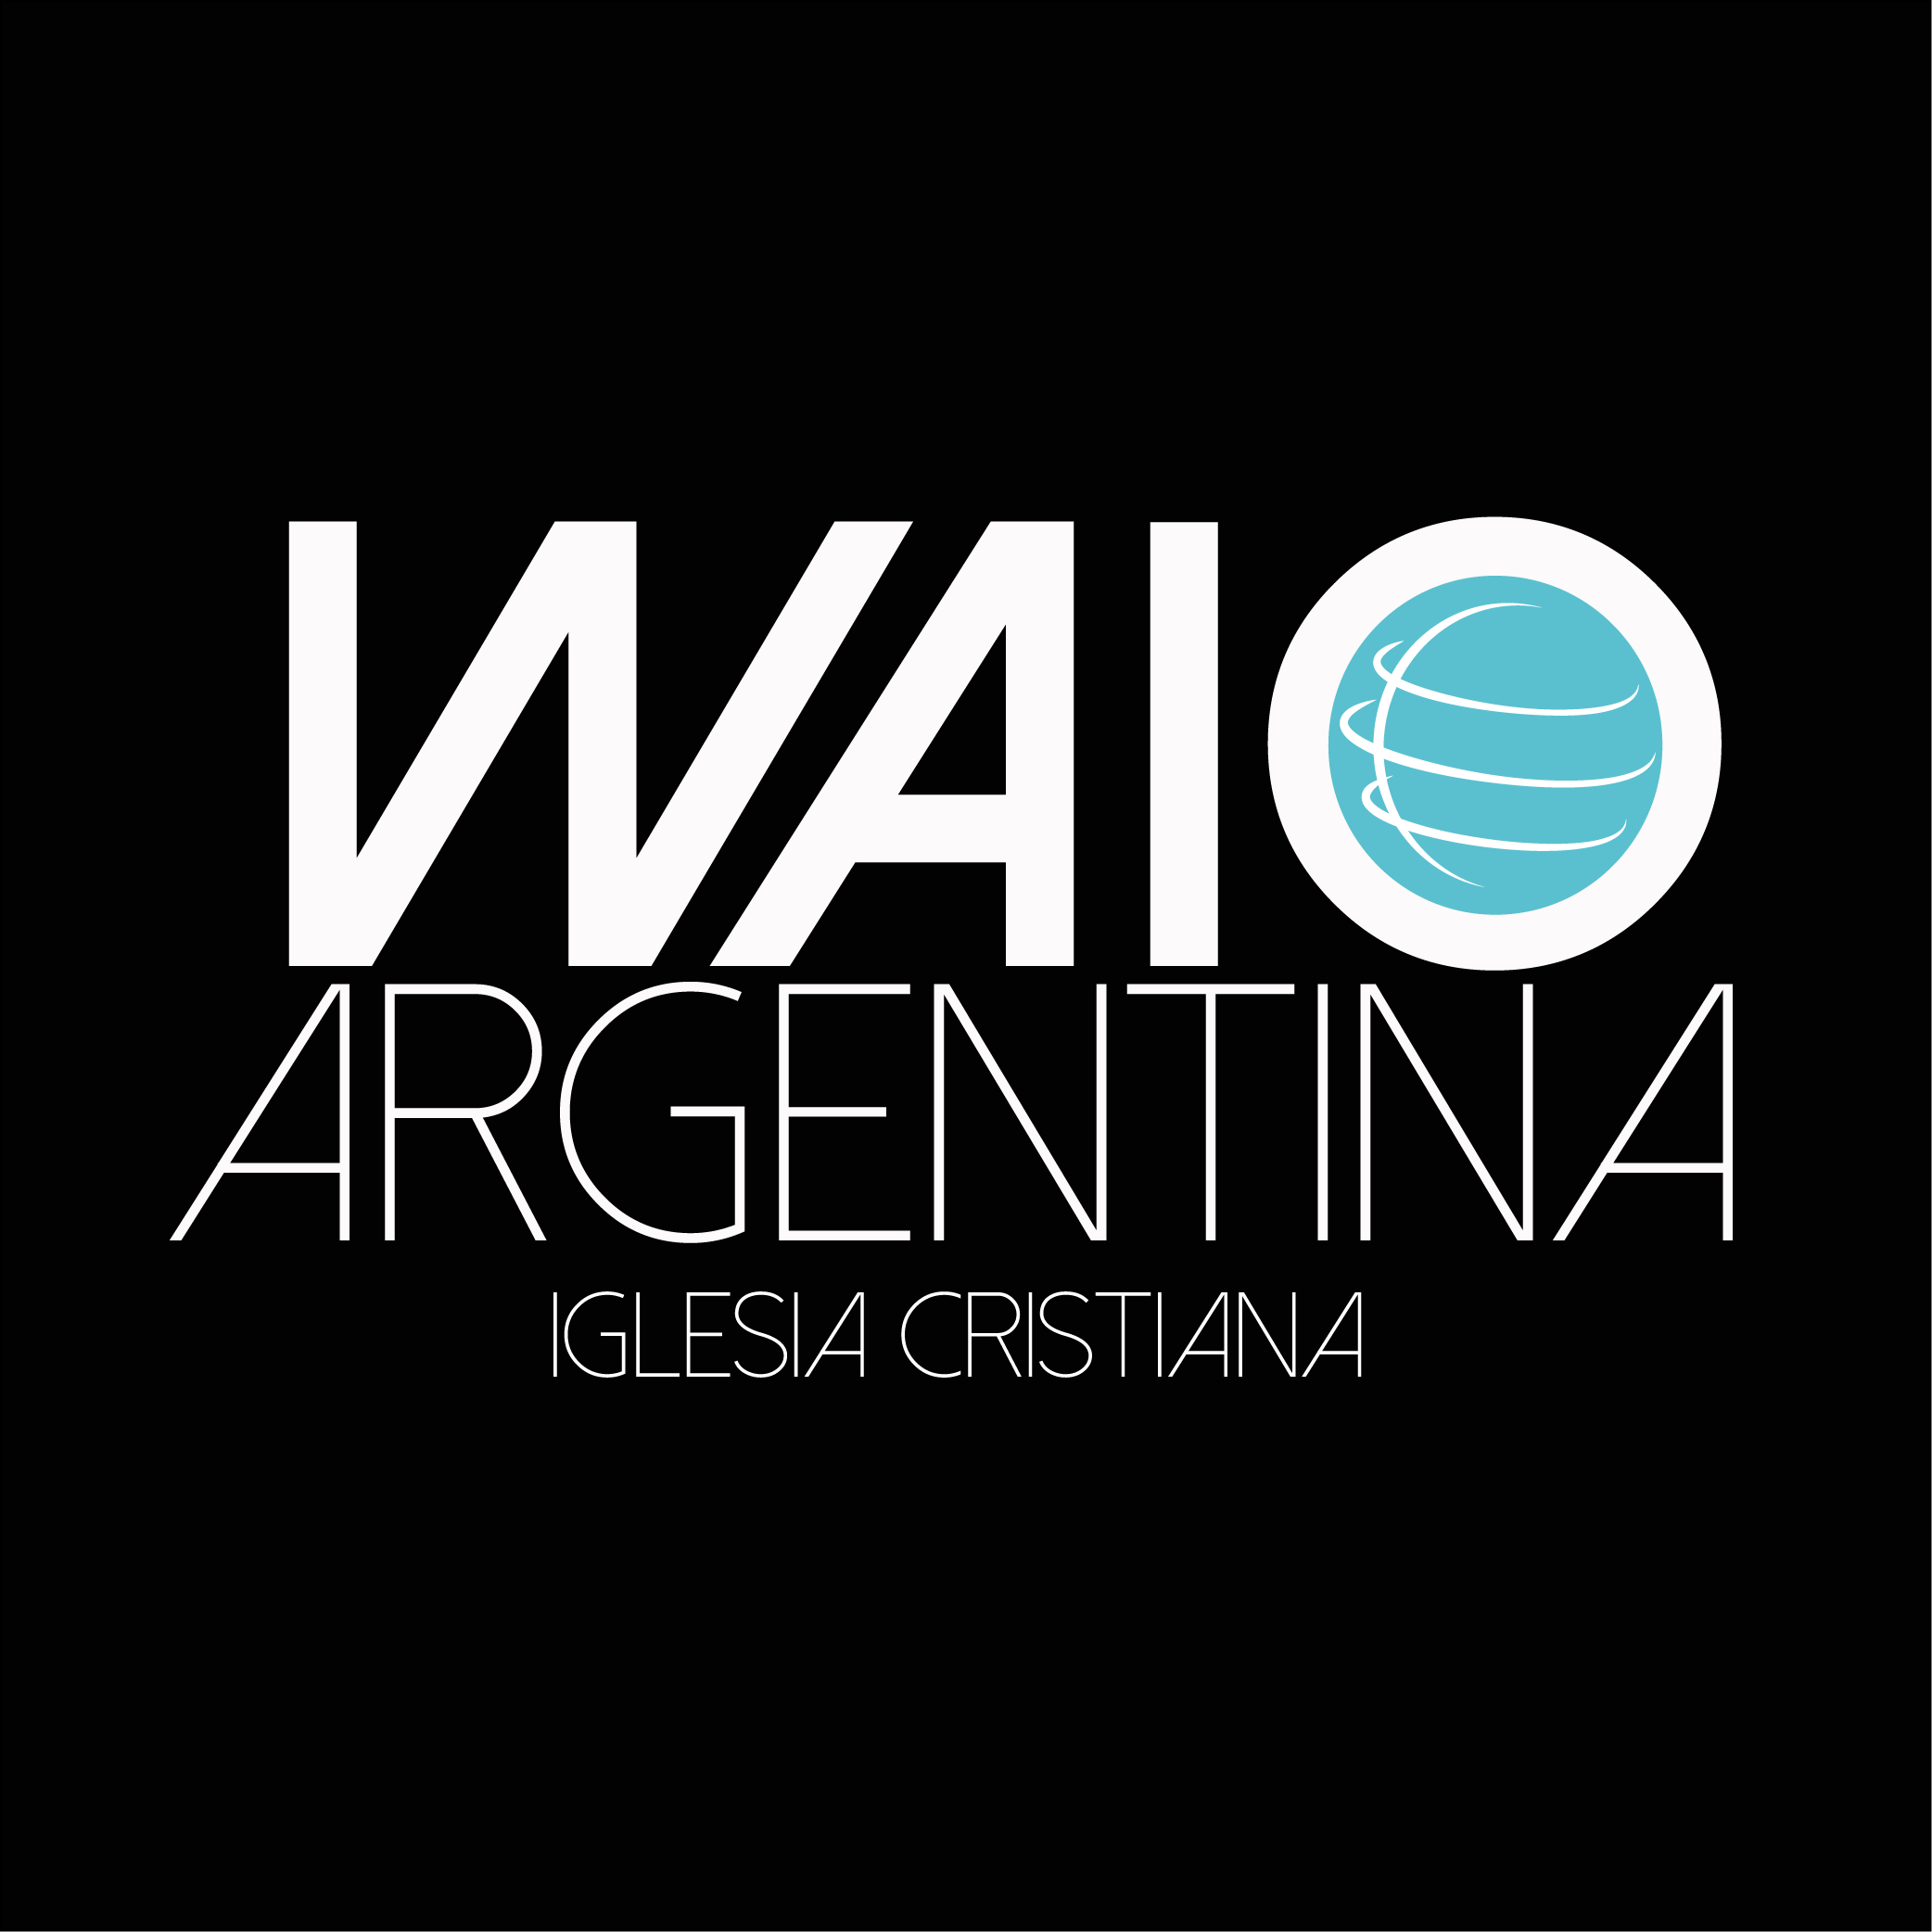 Waio Argentina